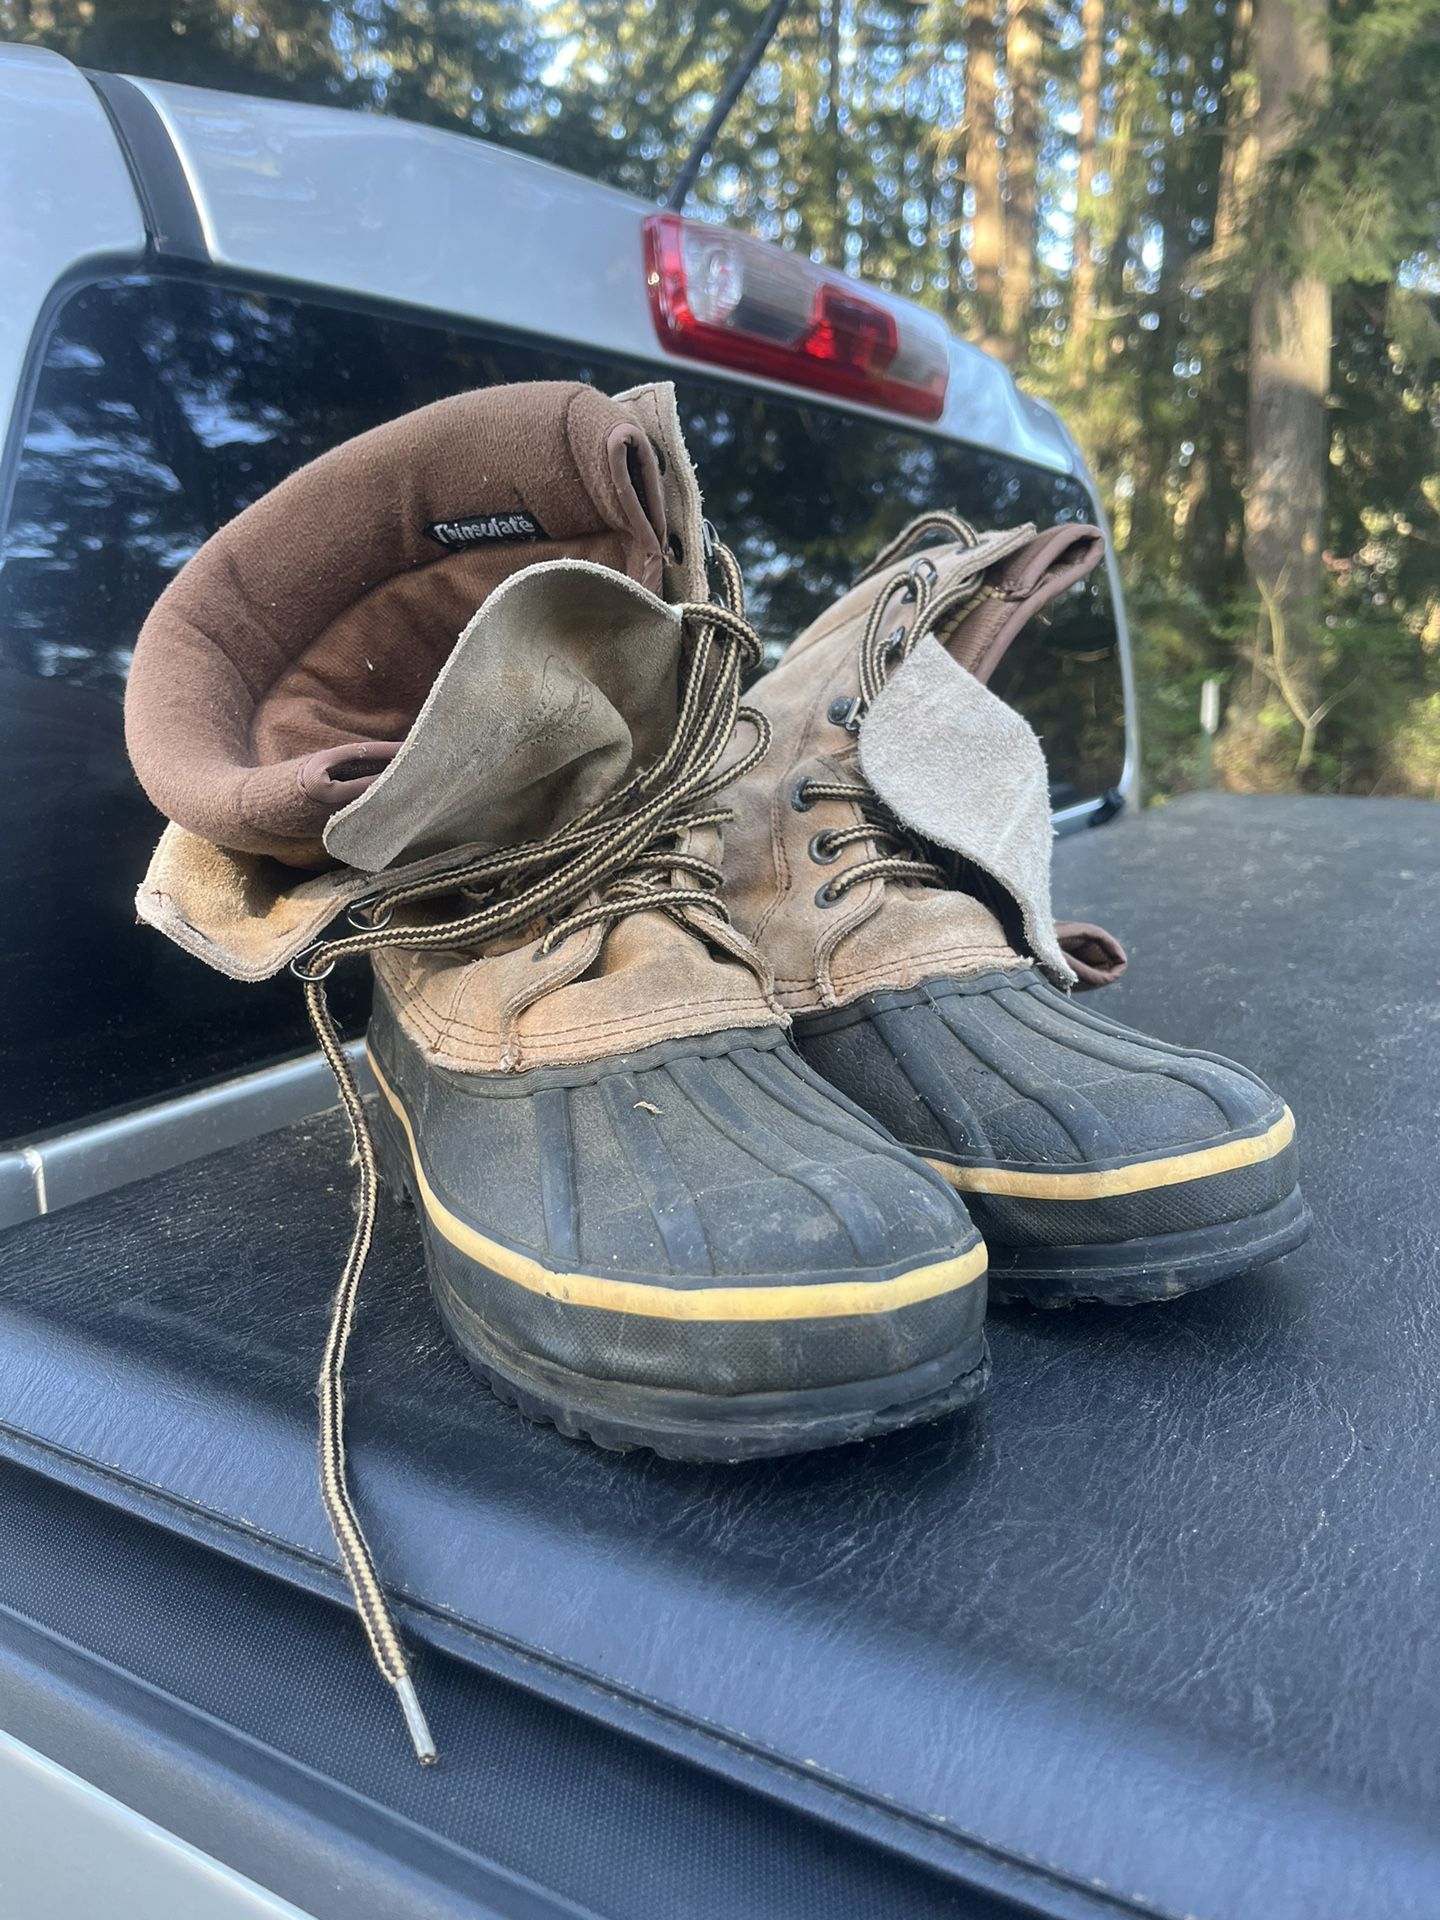 Men’s Eagle Mountain Thinsulate Boots Sz10